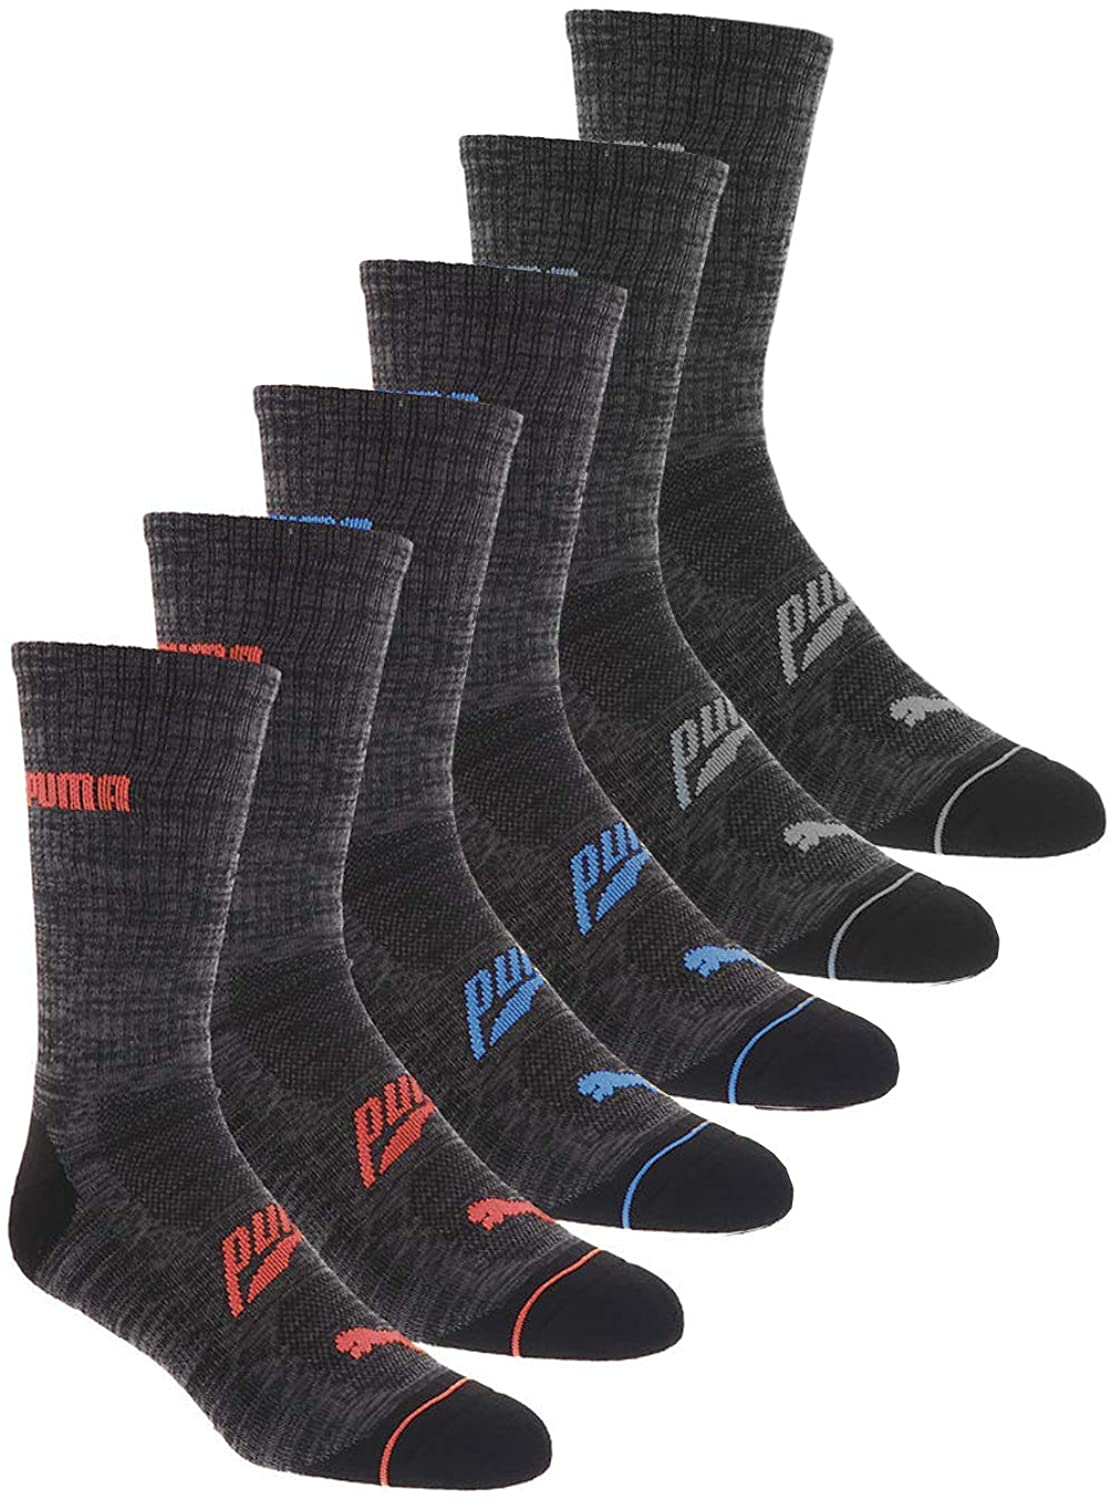 Puma Men's 6 Pack Sport Style Long Crew Socks | eBay